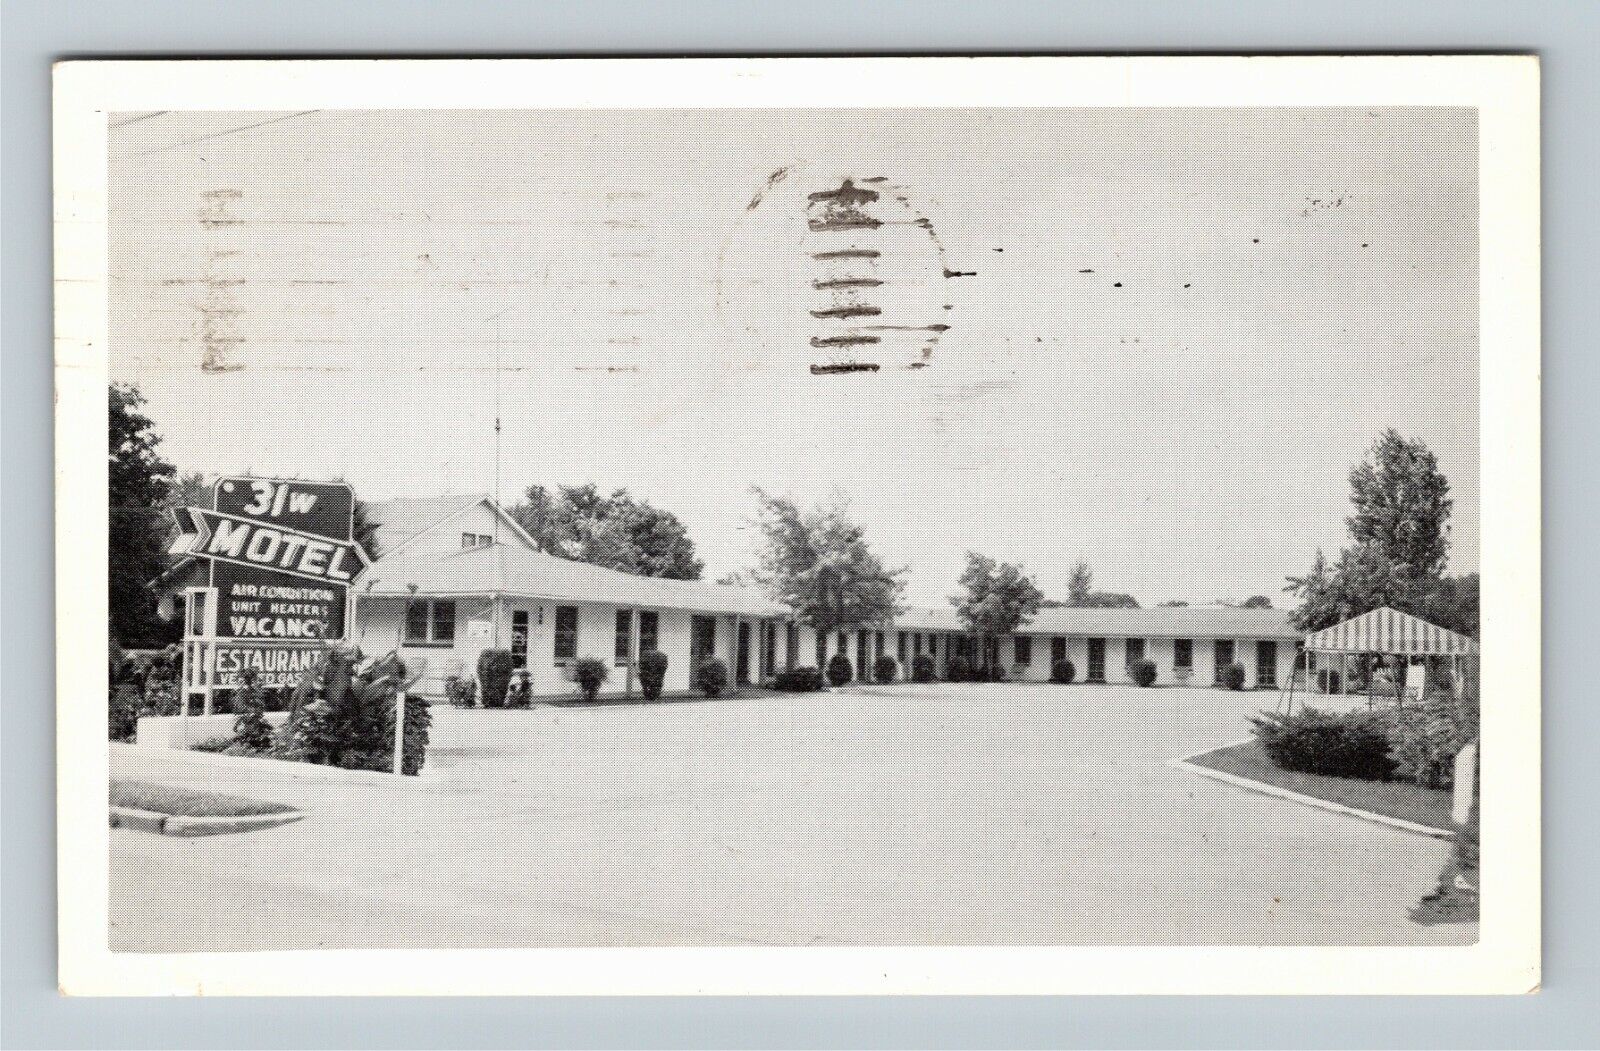 Franklin KY-Kentucky 31-W Motel, Antique c1959 Vintage Souvenir Postcard